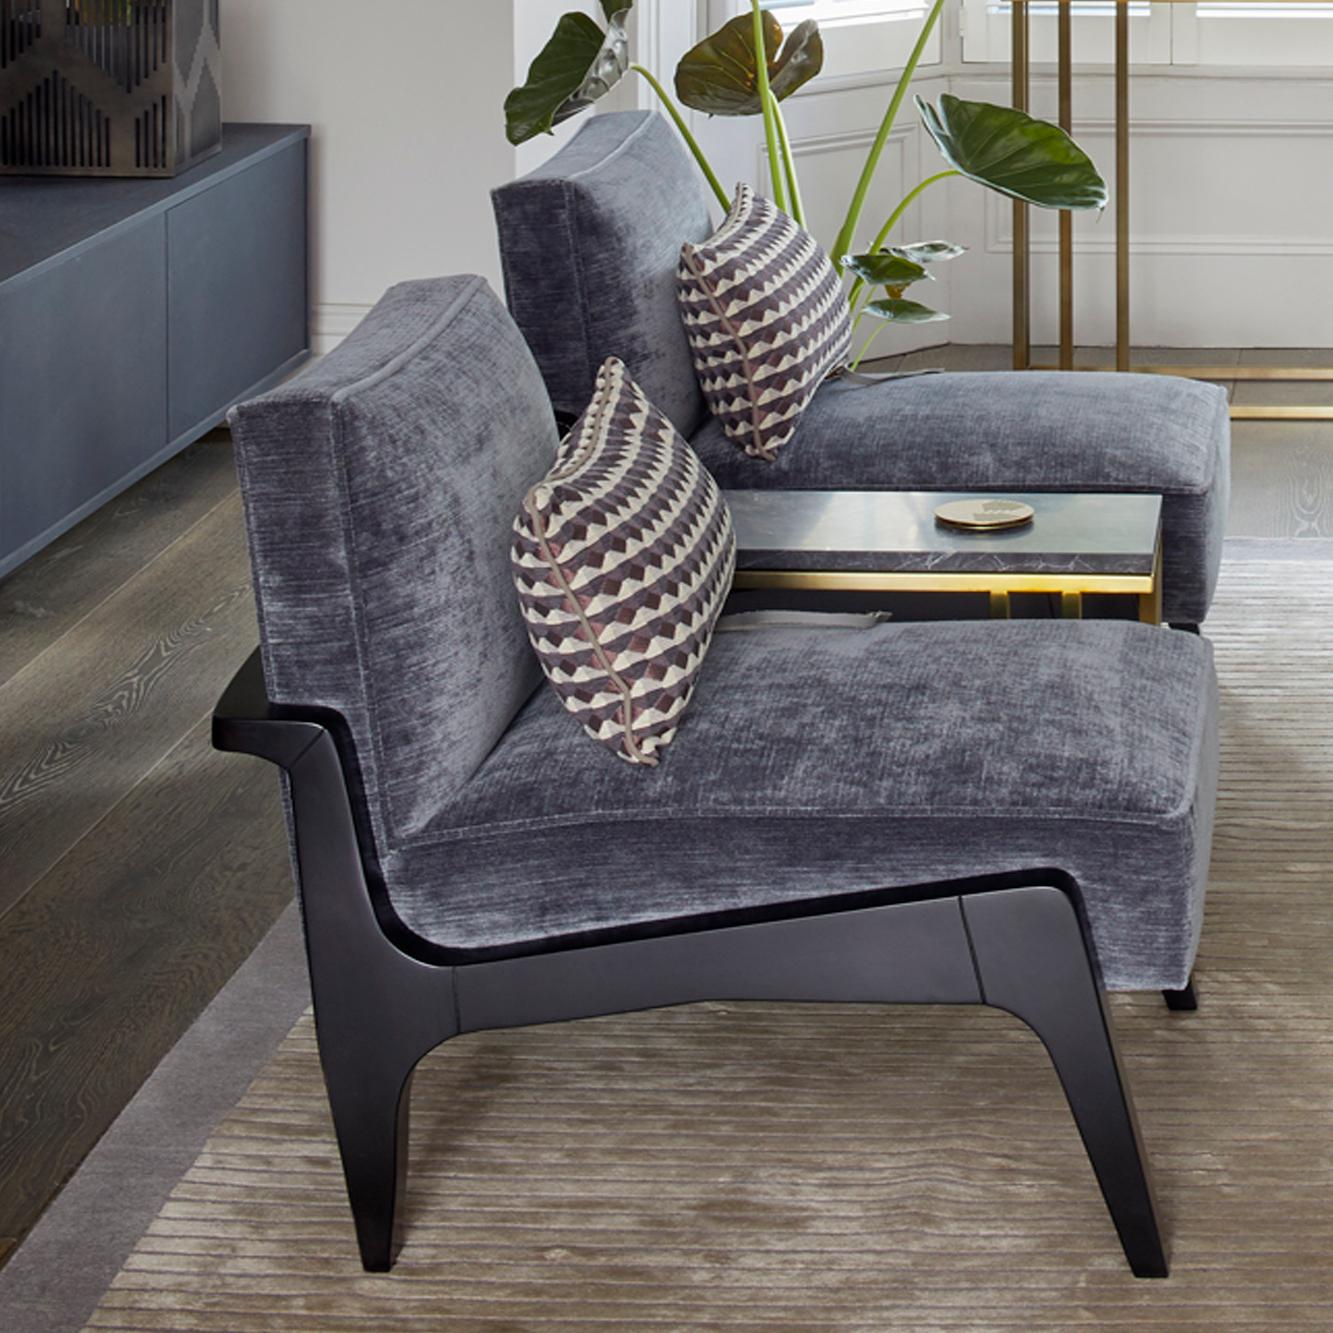 British Art Deco Inspired Atena Chair and Foot Stool, Black Ebony and Grey Ribbed Velvet